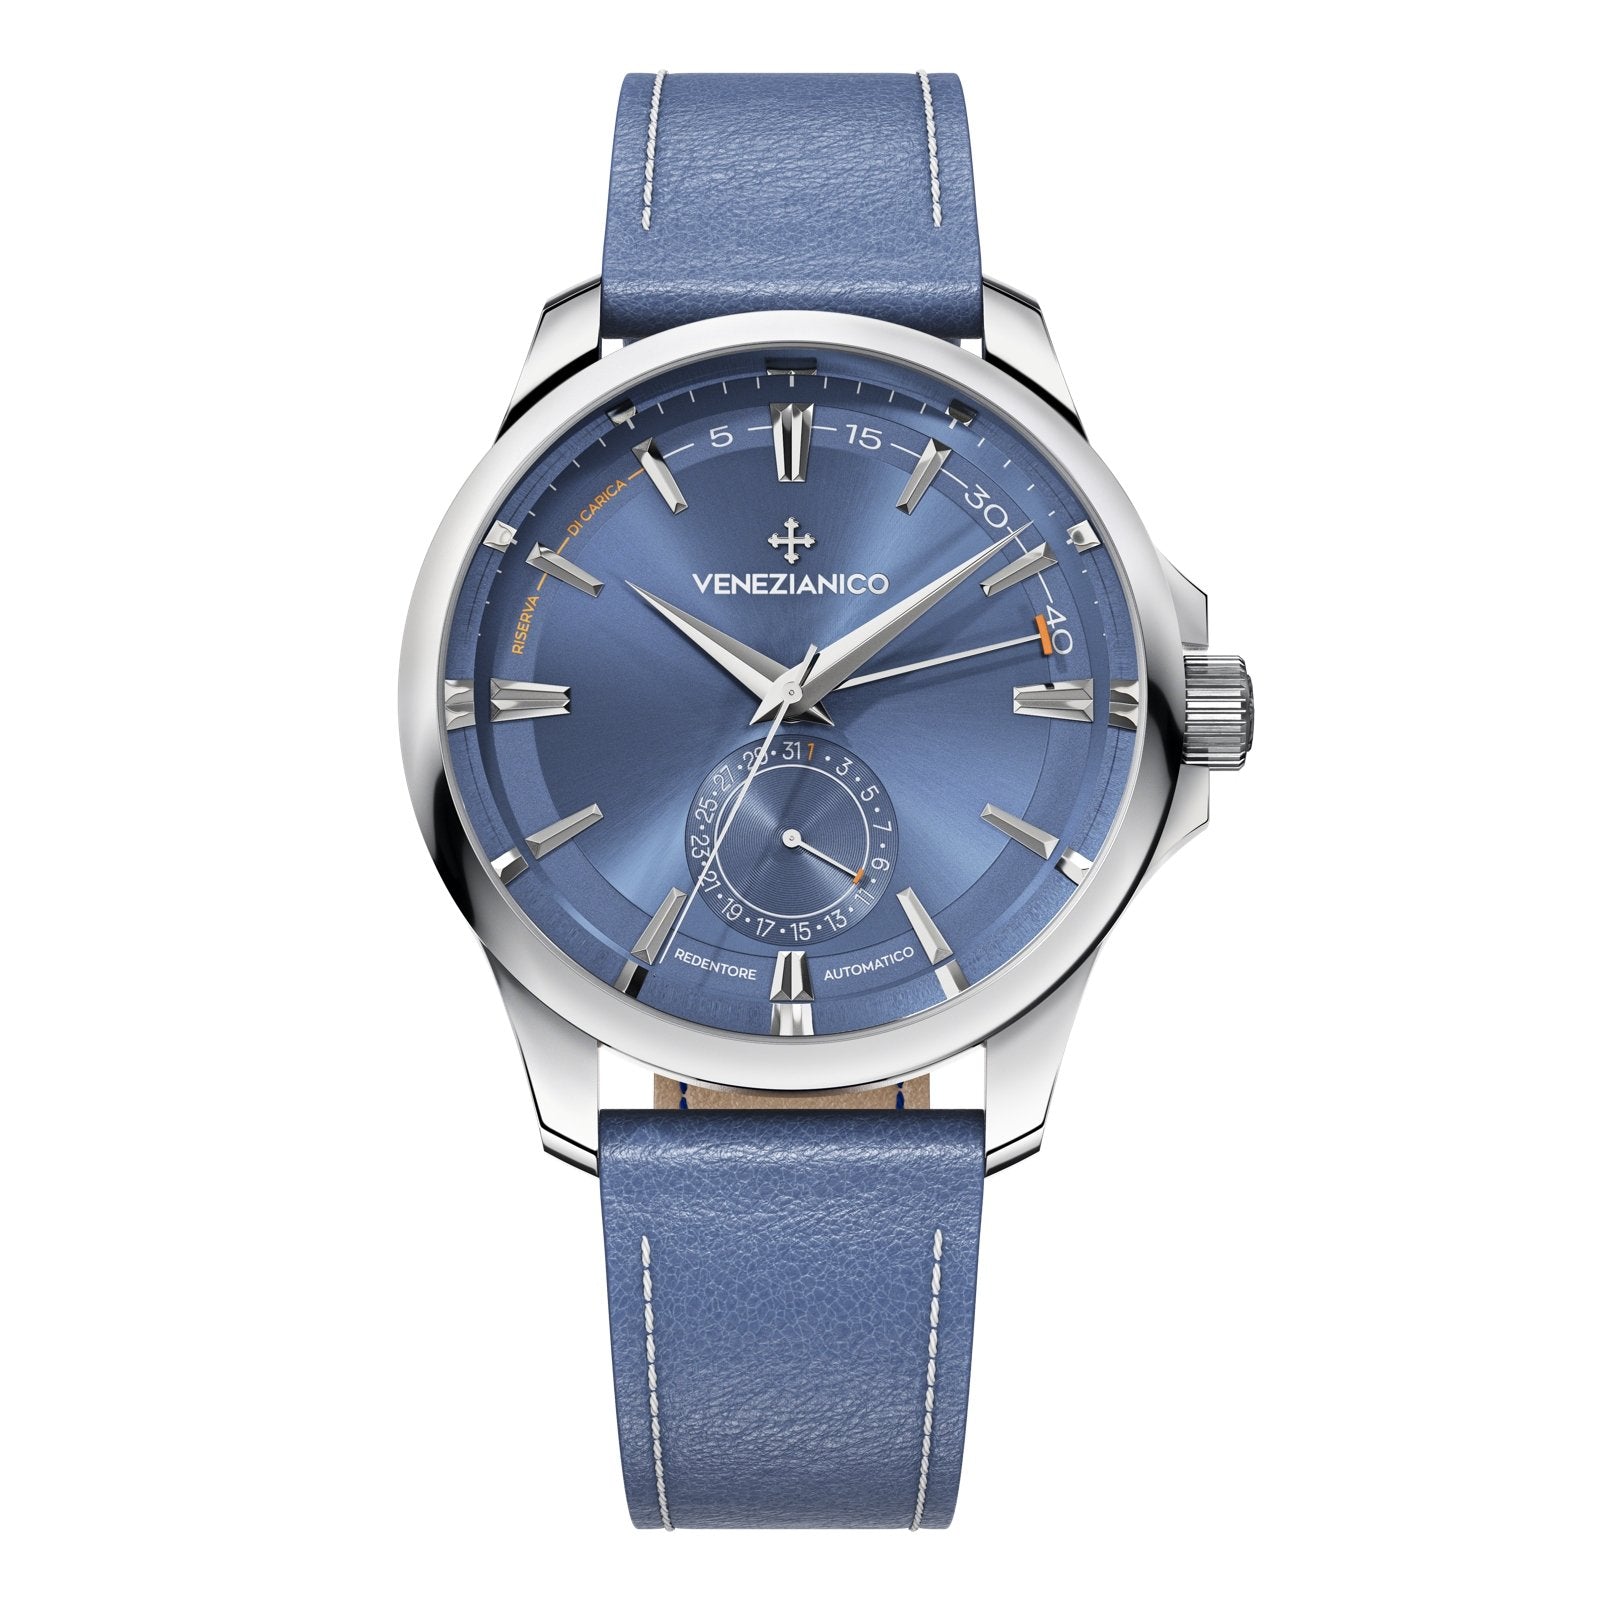 Venezianico Automatic Watch Redentore Riserva di Carica Blue Leather 1321502 - Watches & Crystals